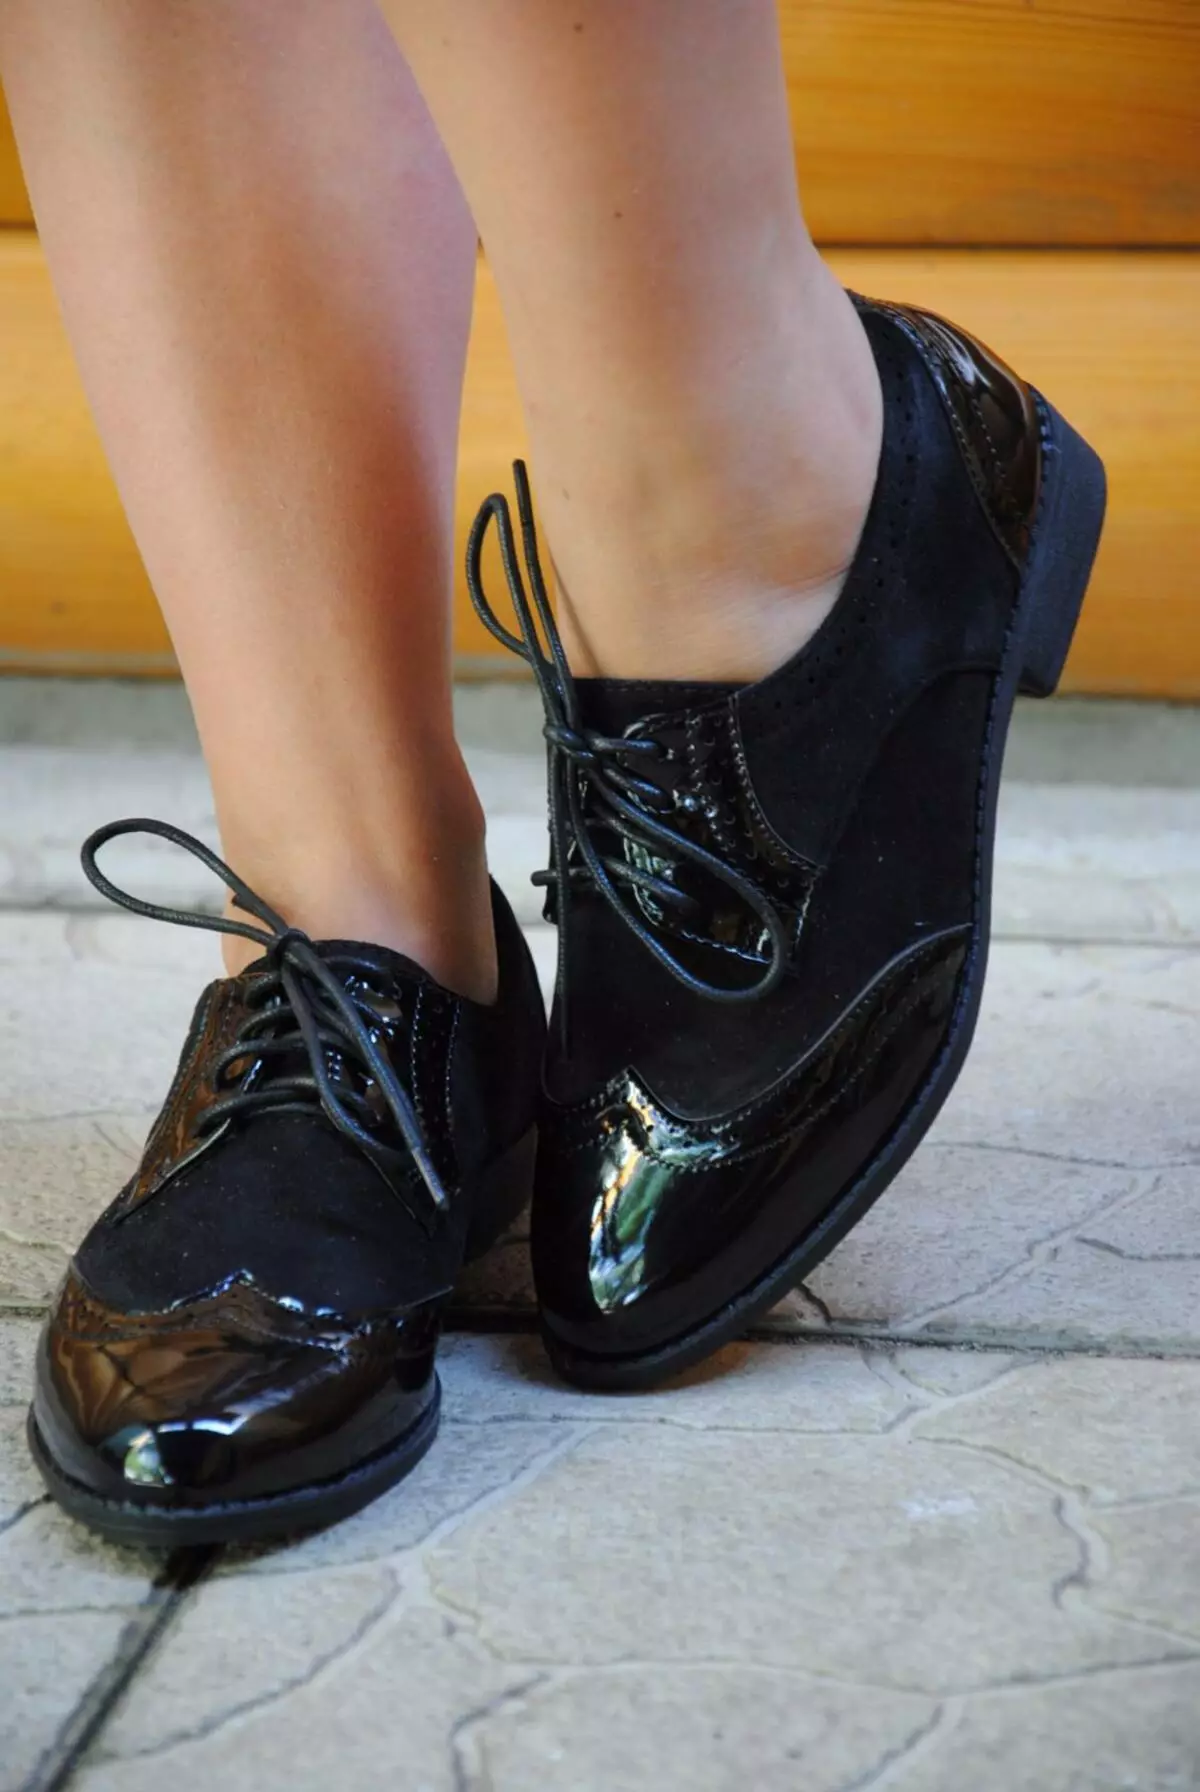 Sepatu wanita yang rendah (58 foto): Model pada tumit kecil, di kulit kecil yang kecil 2562_52